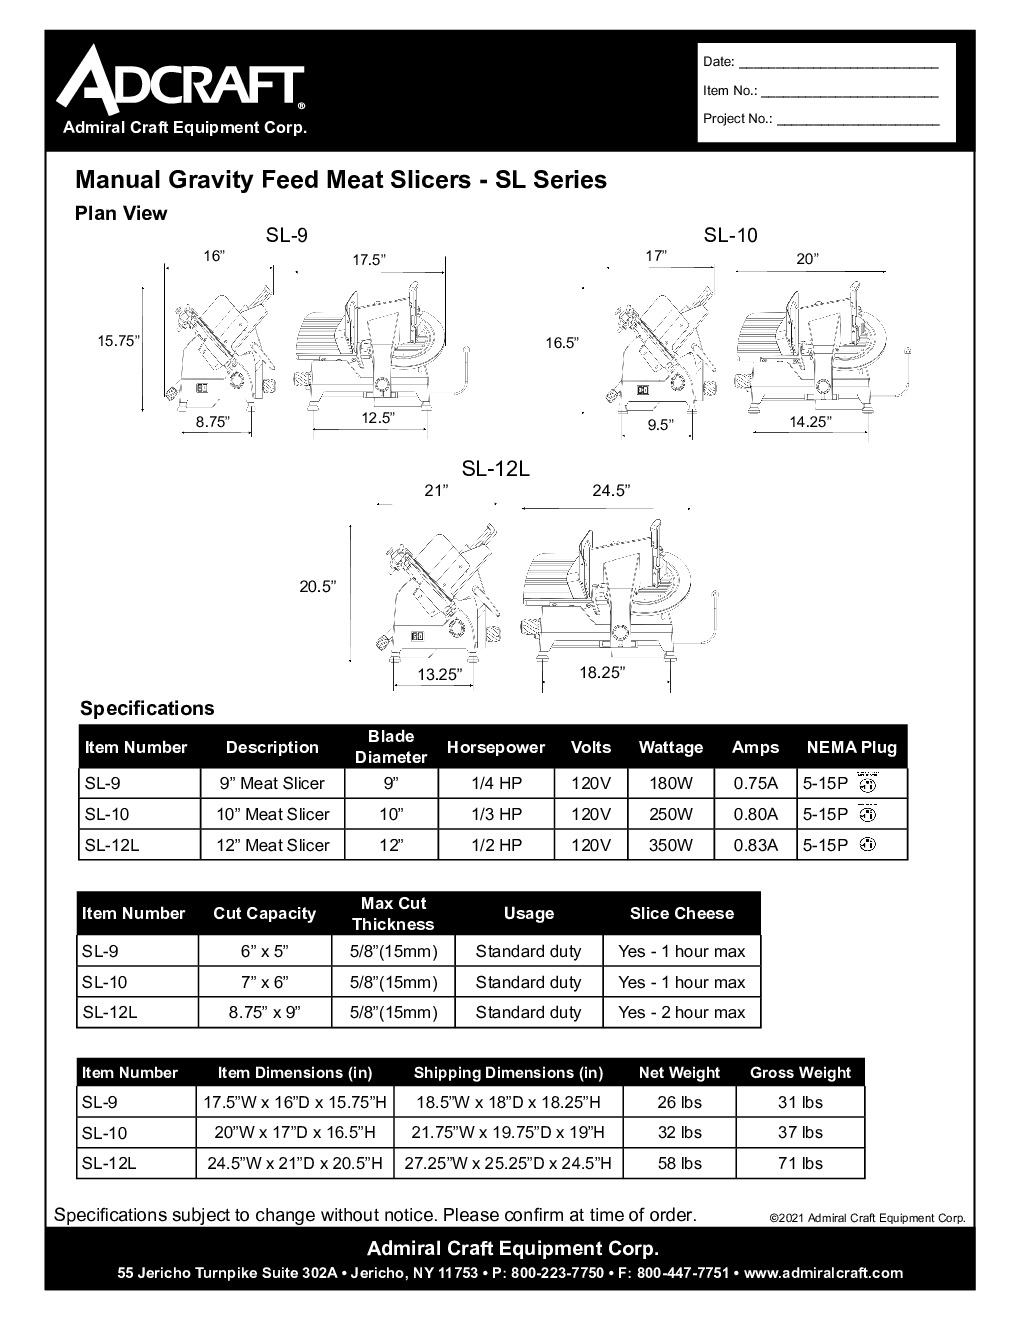 Adcraft SL-10 Manual Gravity Feed Meat Slicer w/ 10